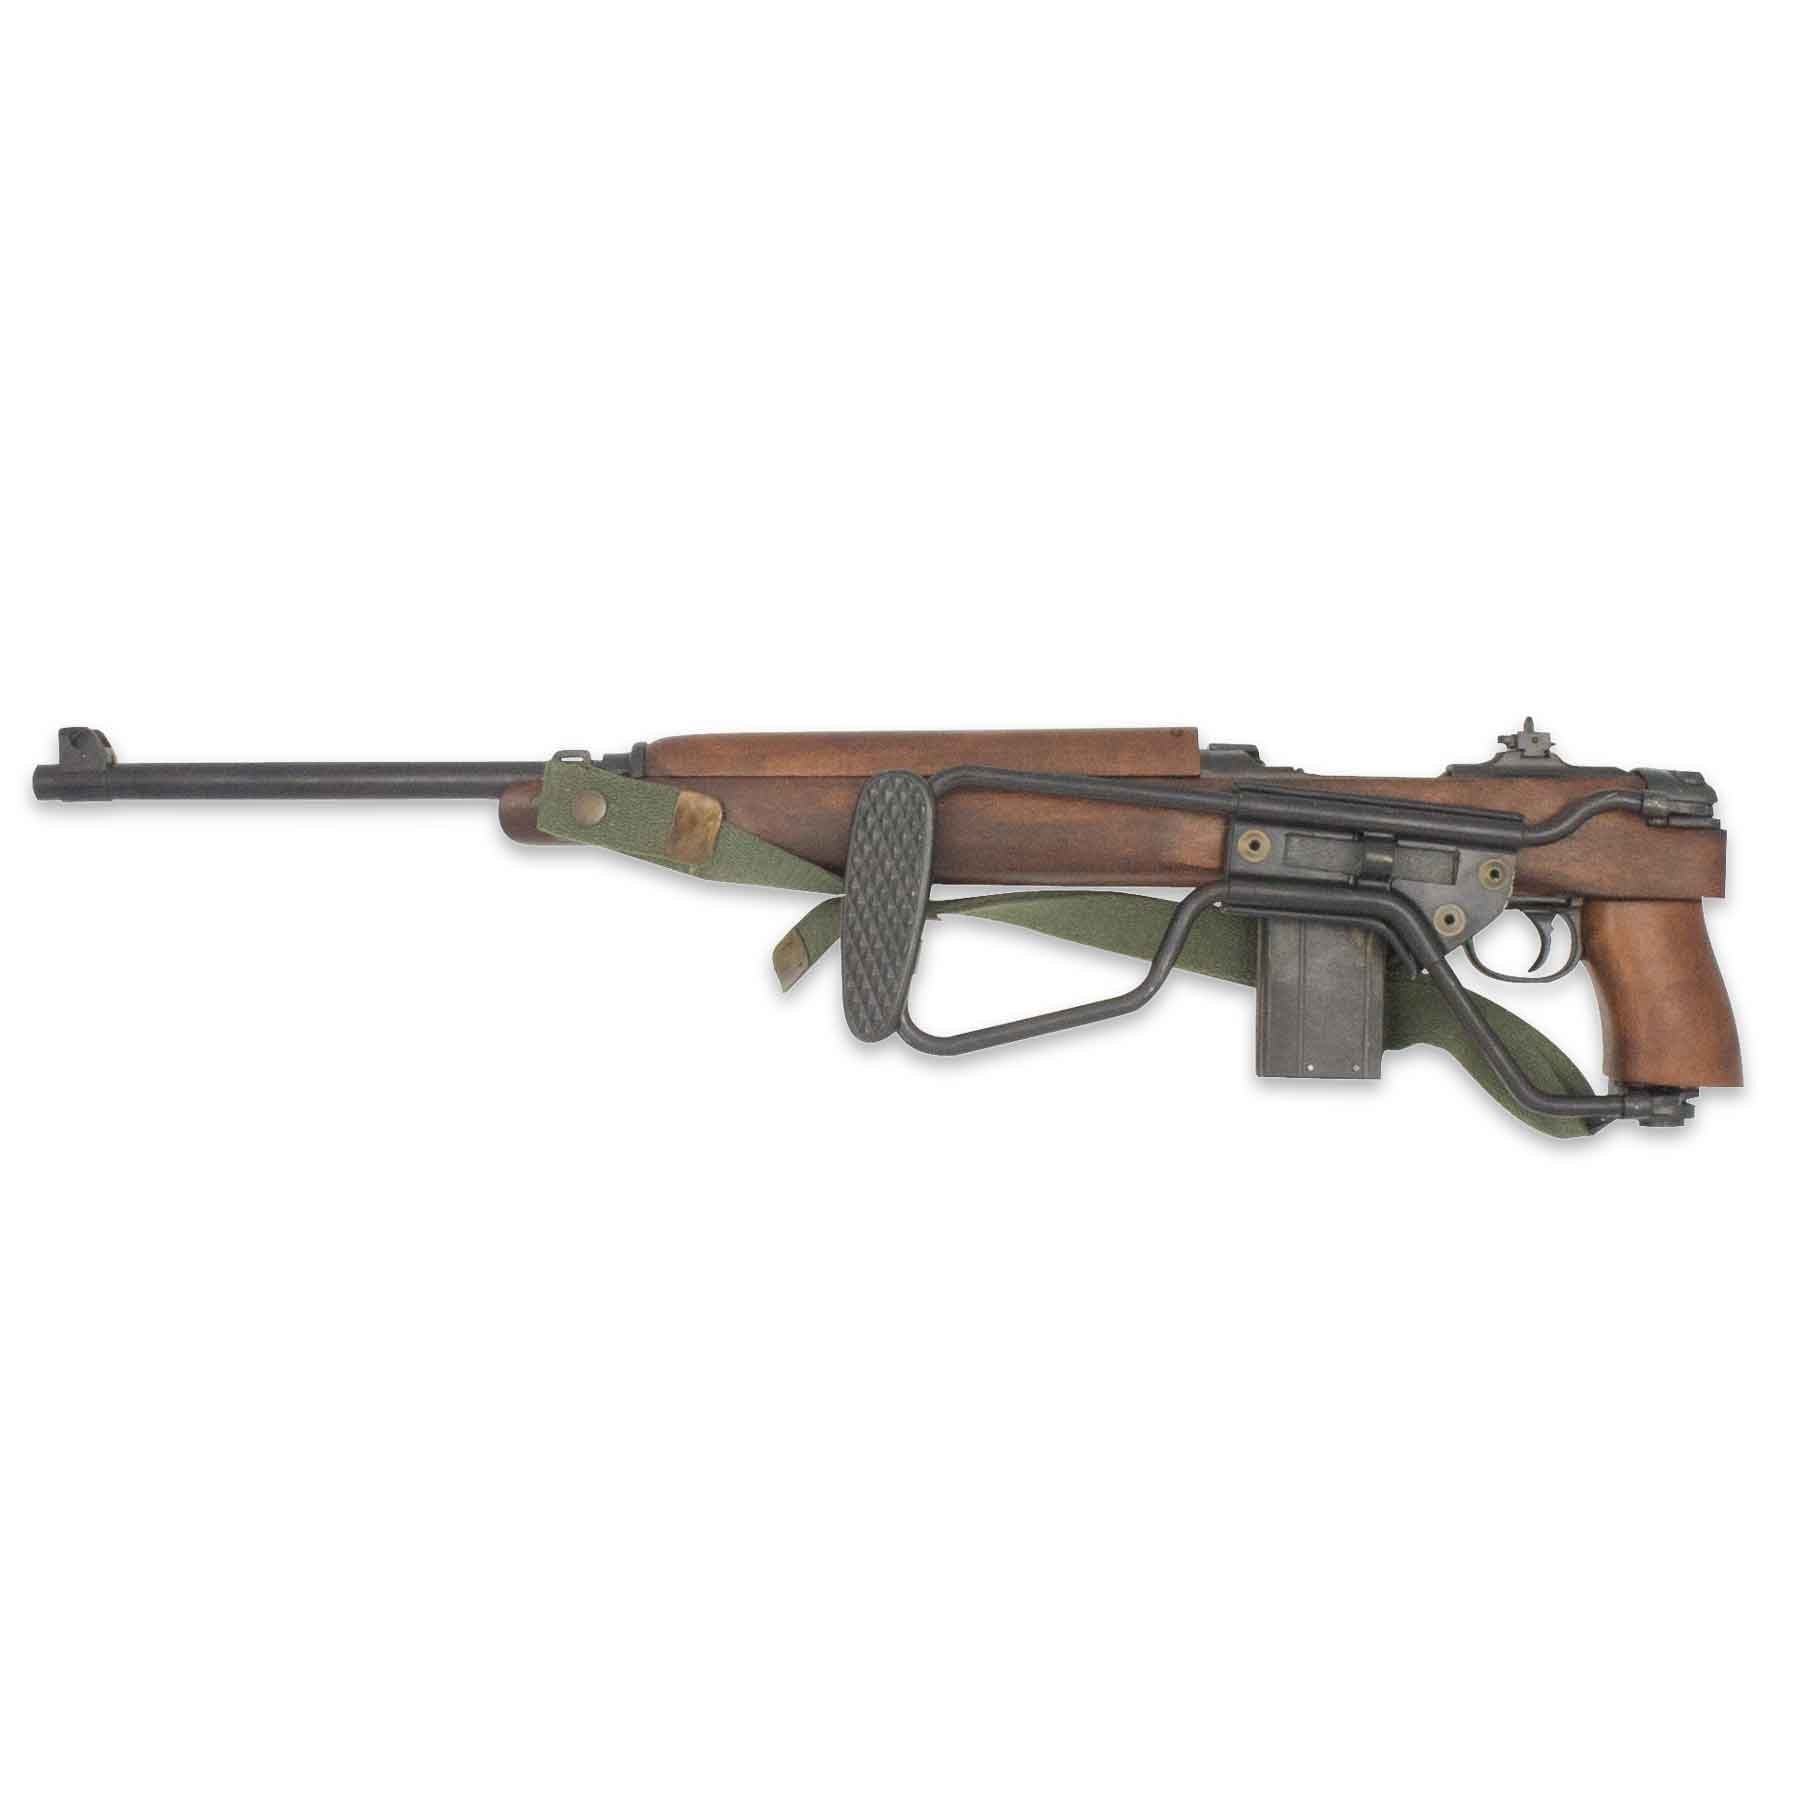 m1a1 carbine rifle